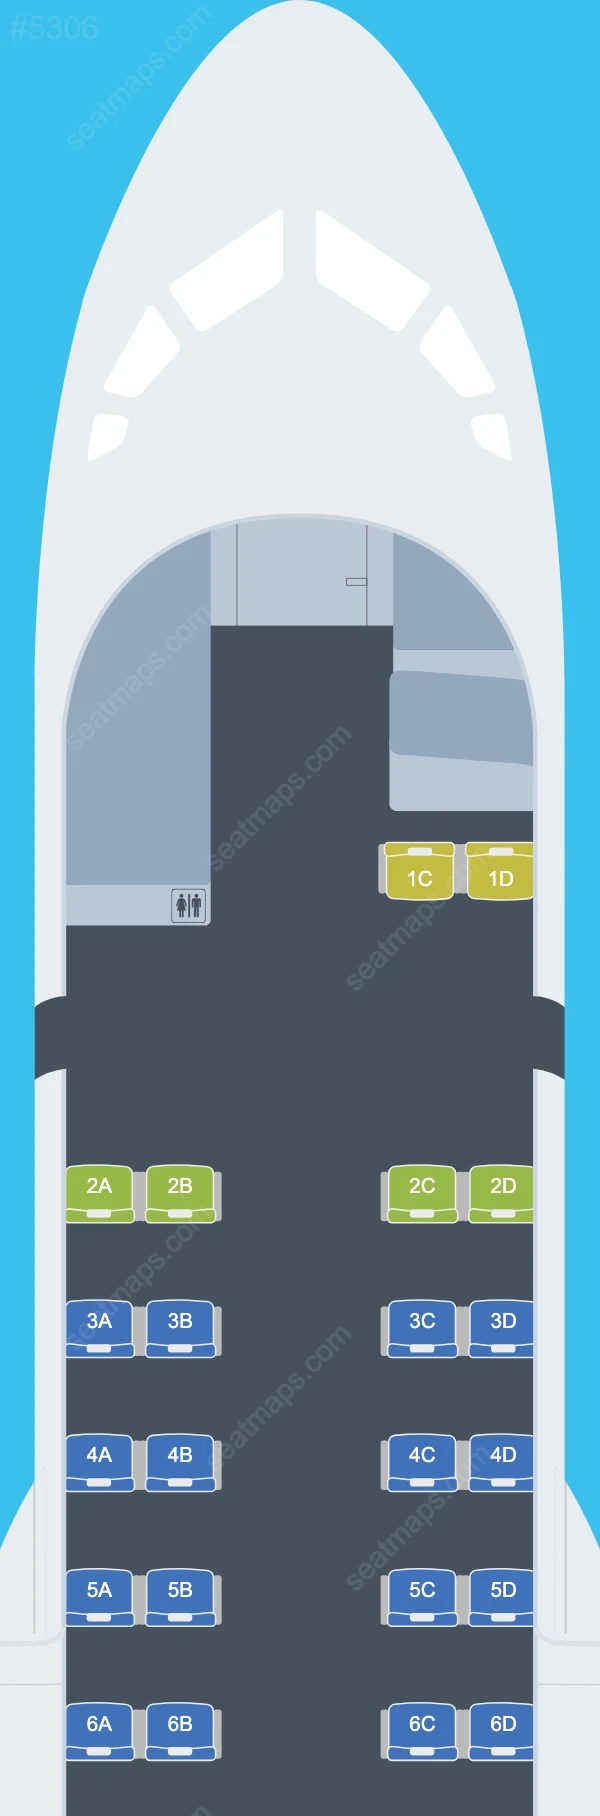 Aer Lingus Limited ATR 42 / 72 Seat Maps 42-300